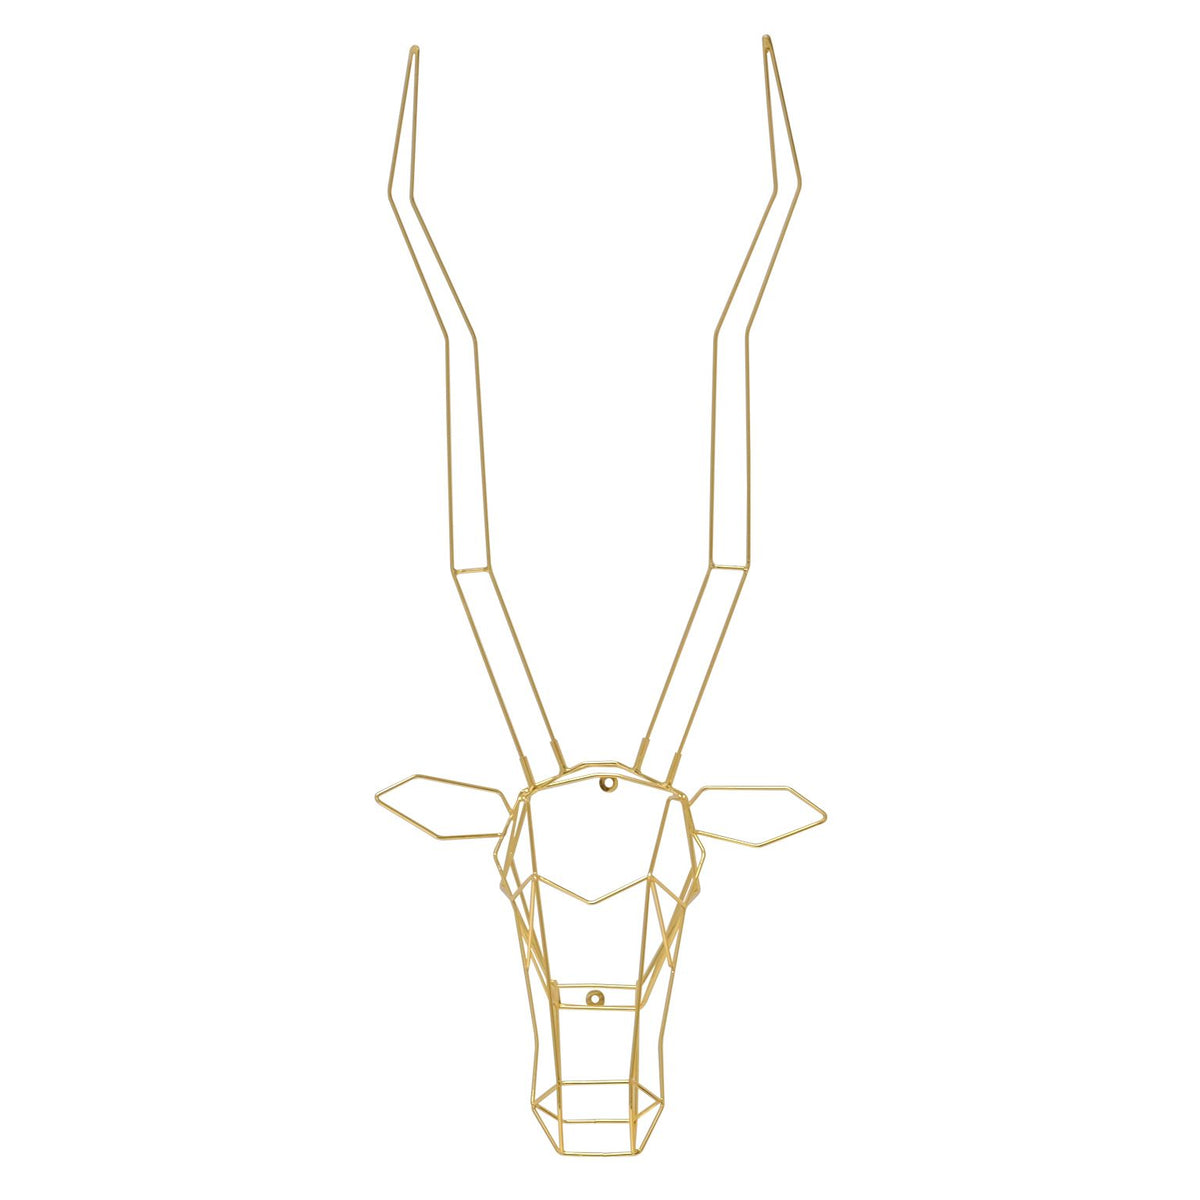 Gazelle by Bend Goods